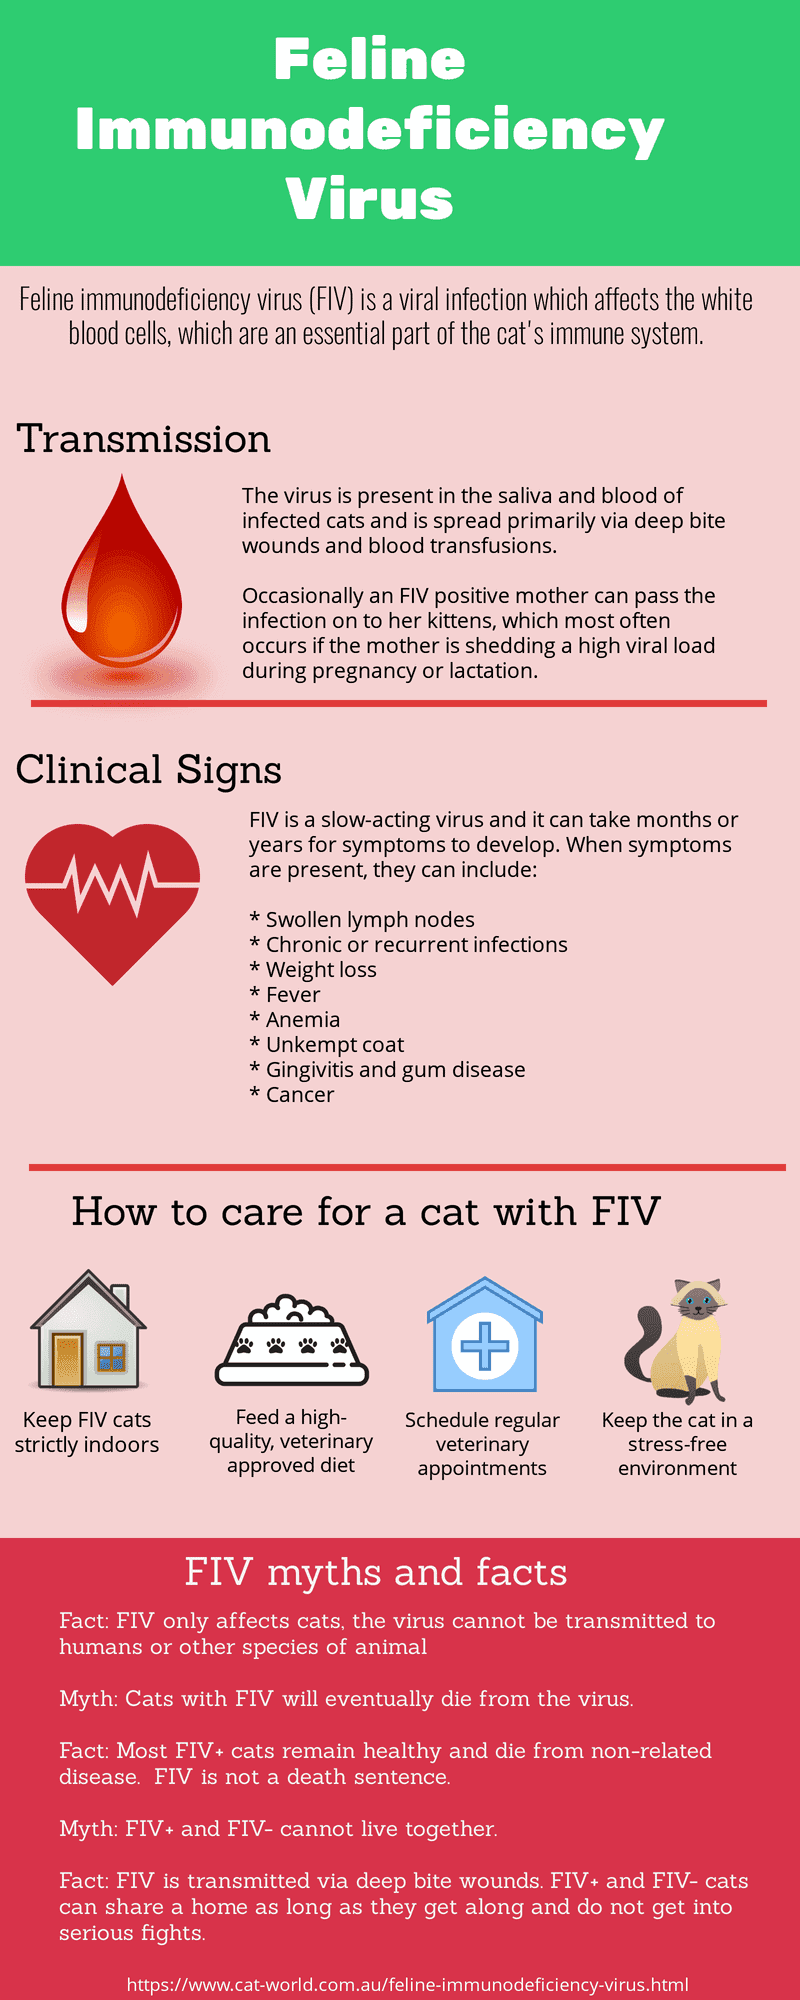 Feline immunodeficiency virus (FIV) in cats infographic